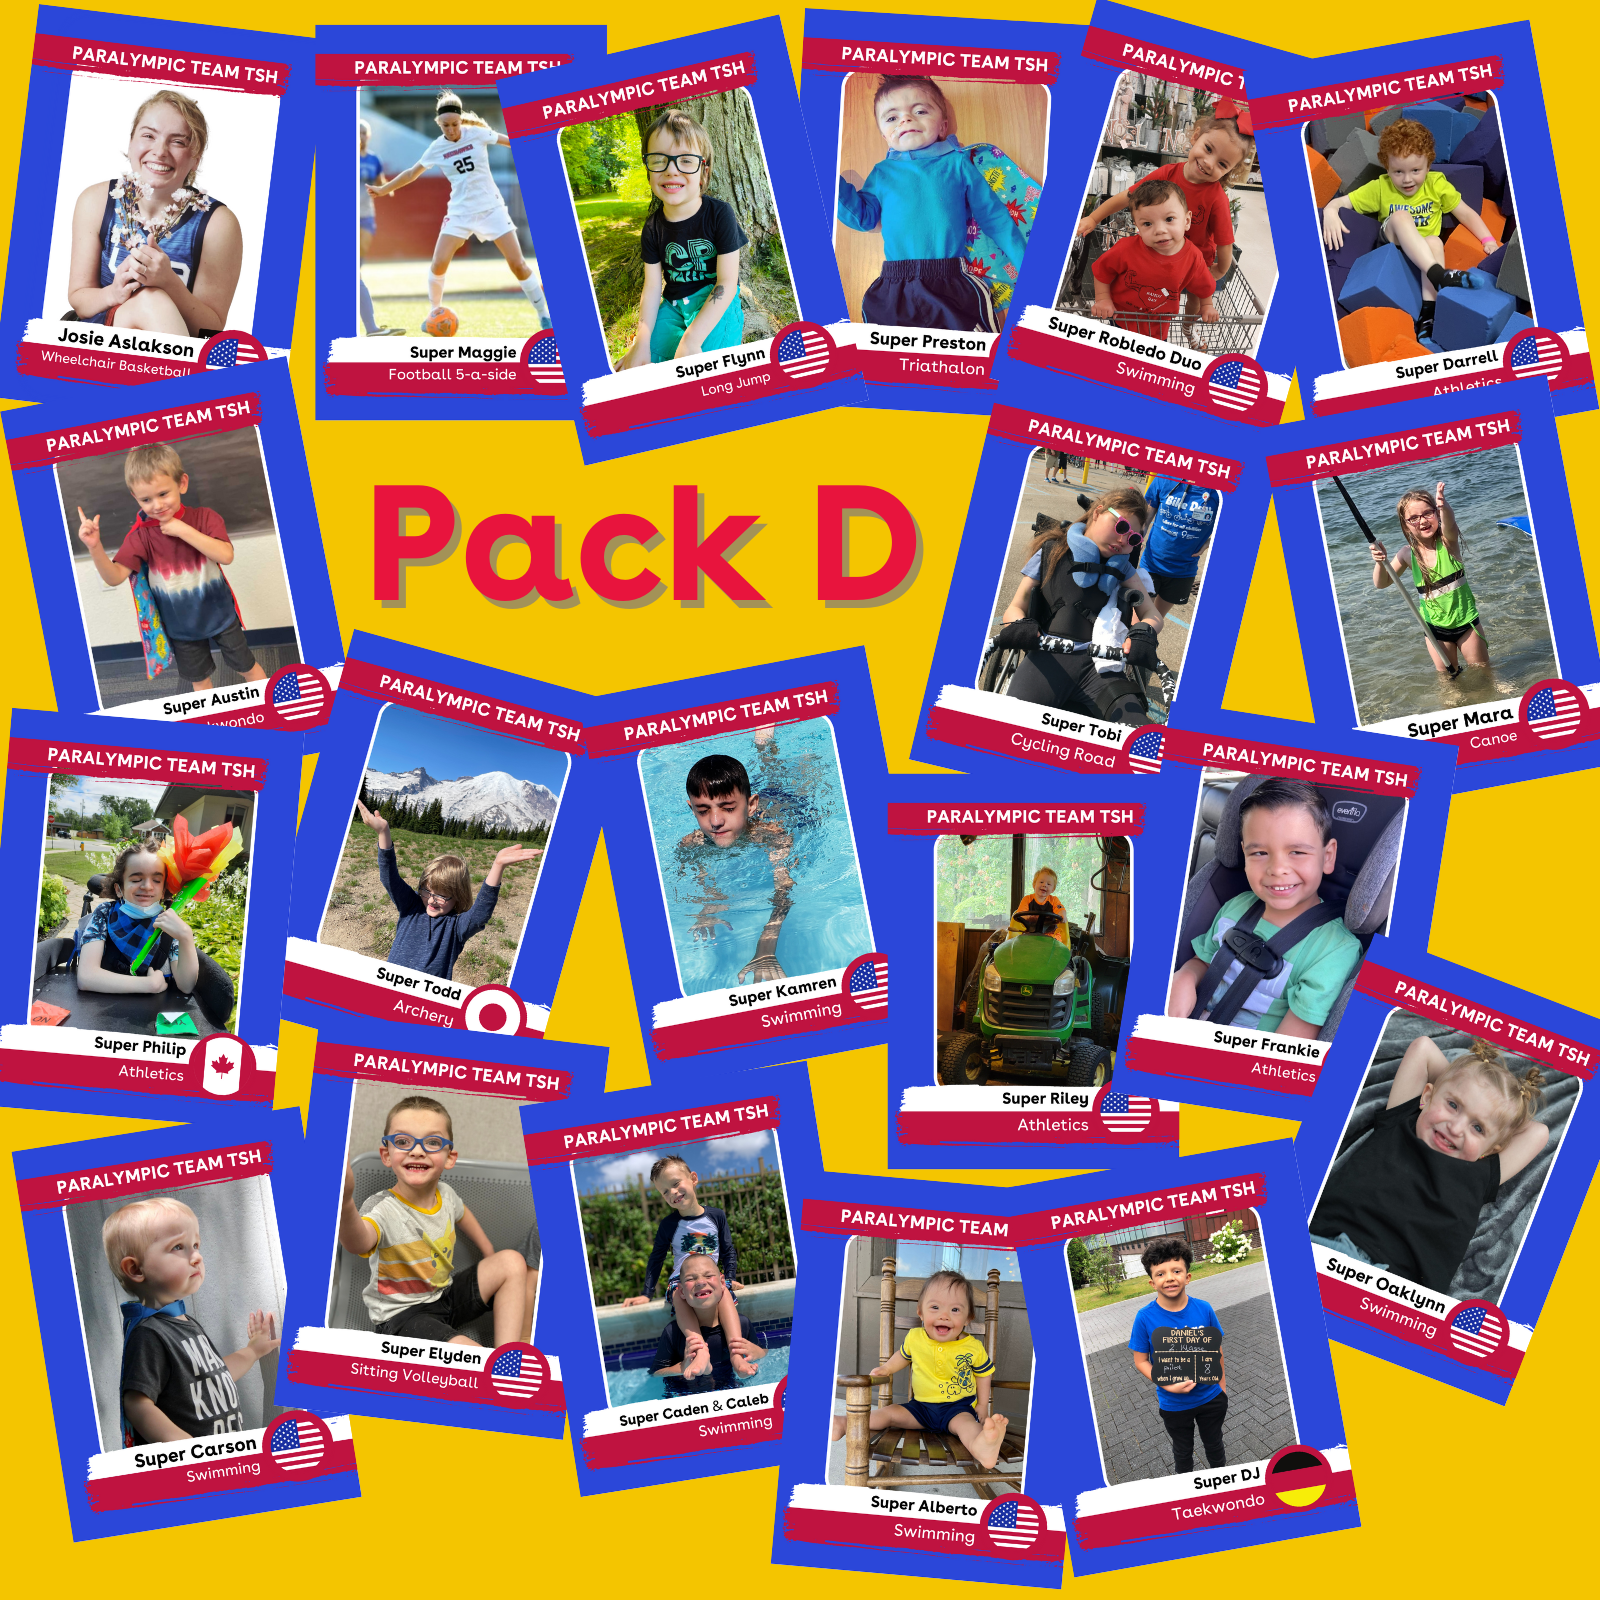 Paralympic Squad Card Packs - TinySuperheroes